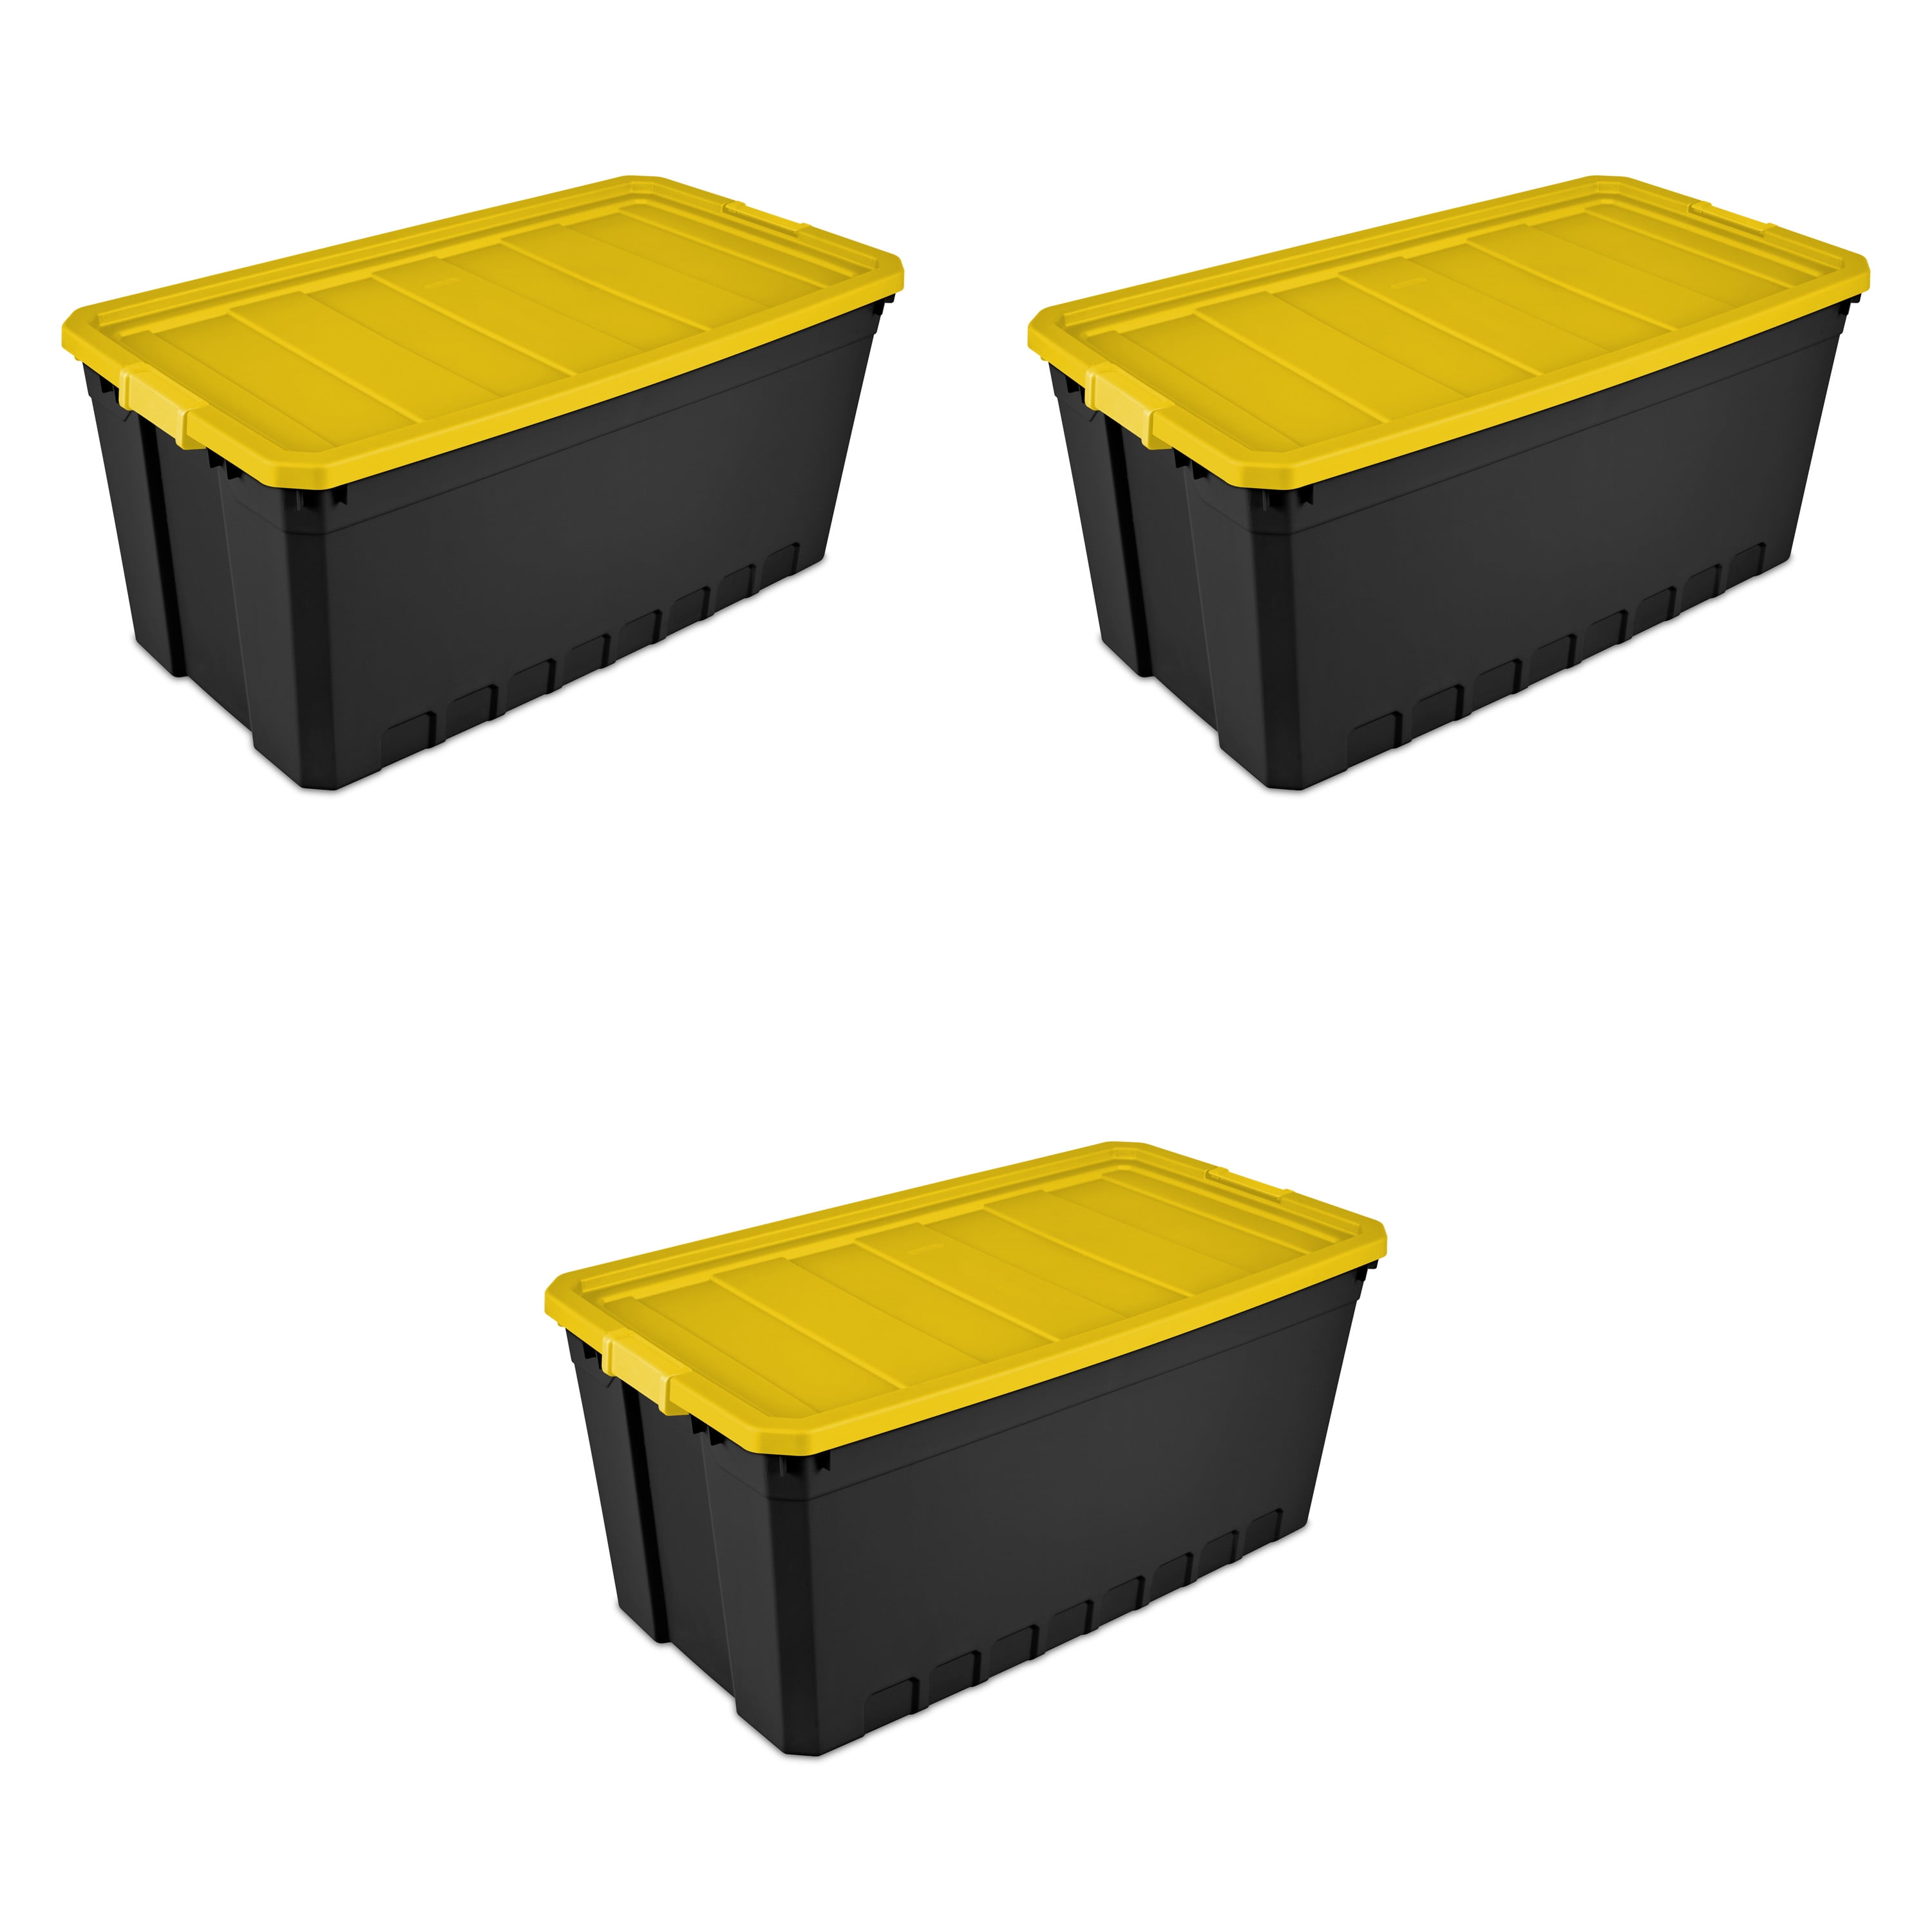 Details about   Pioneer Plastics Rectangular Plastic Container 6.75" x 4.8125" x 2.375" 12 Pack